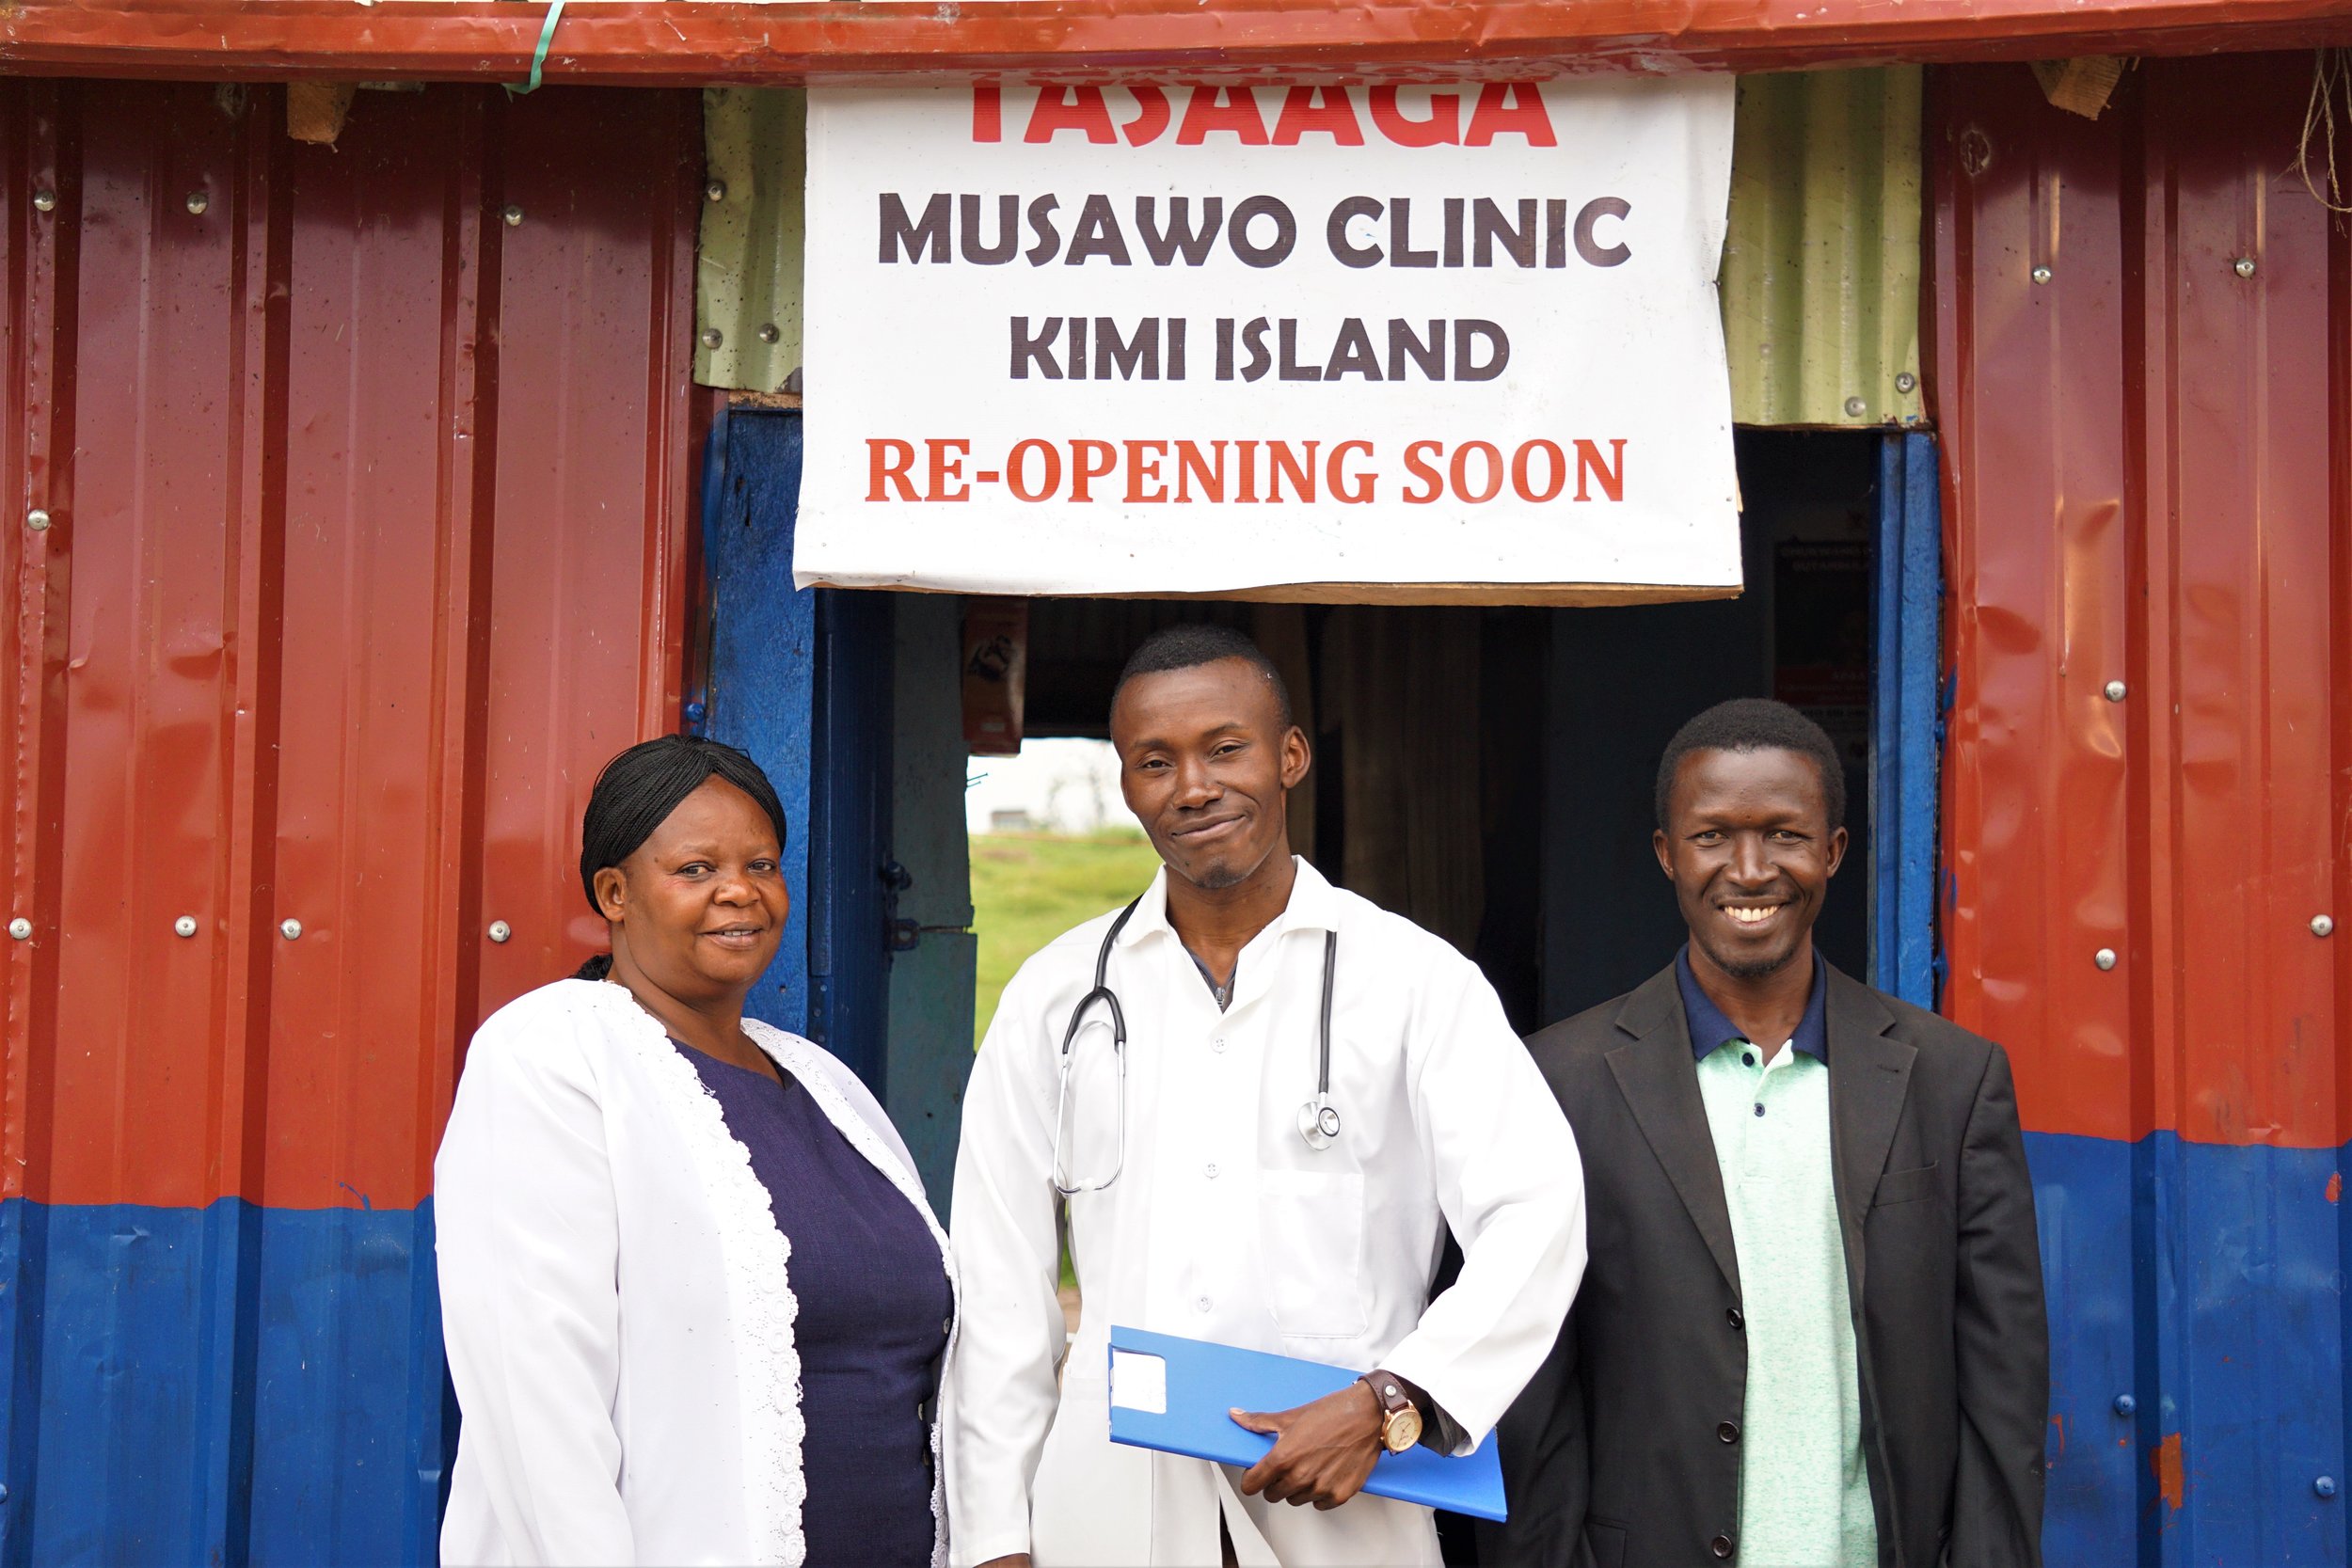 Musawo Clinic - Kimi Island